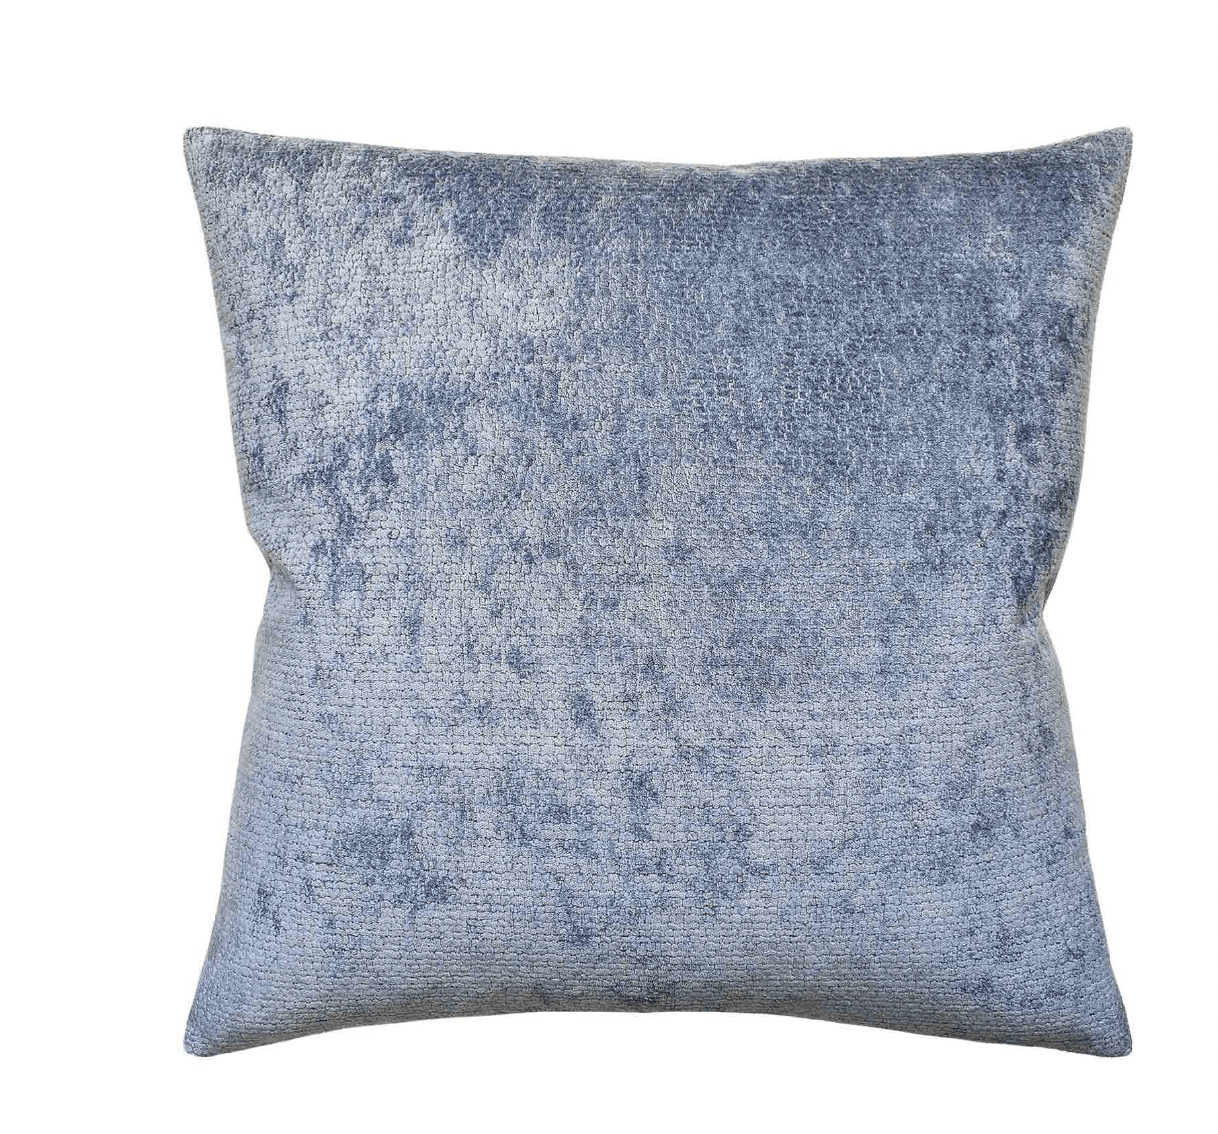 Ryan Studio Rebus Pillow in Blue Pillows